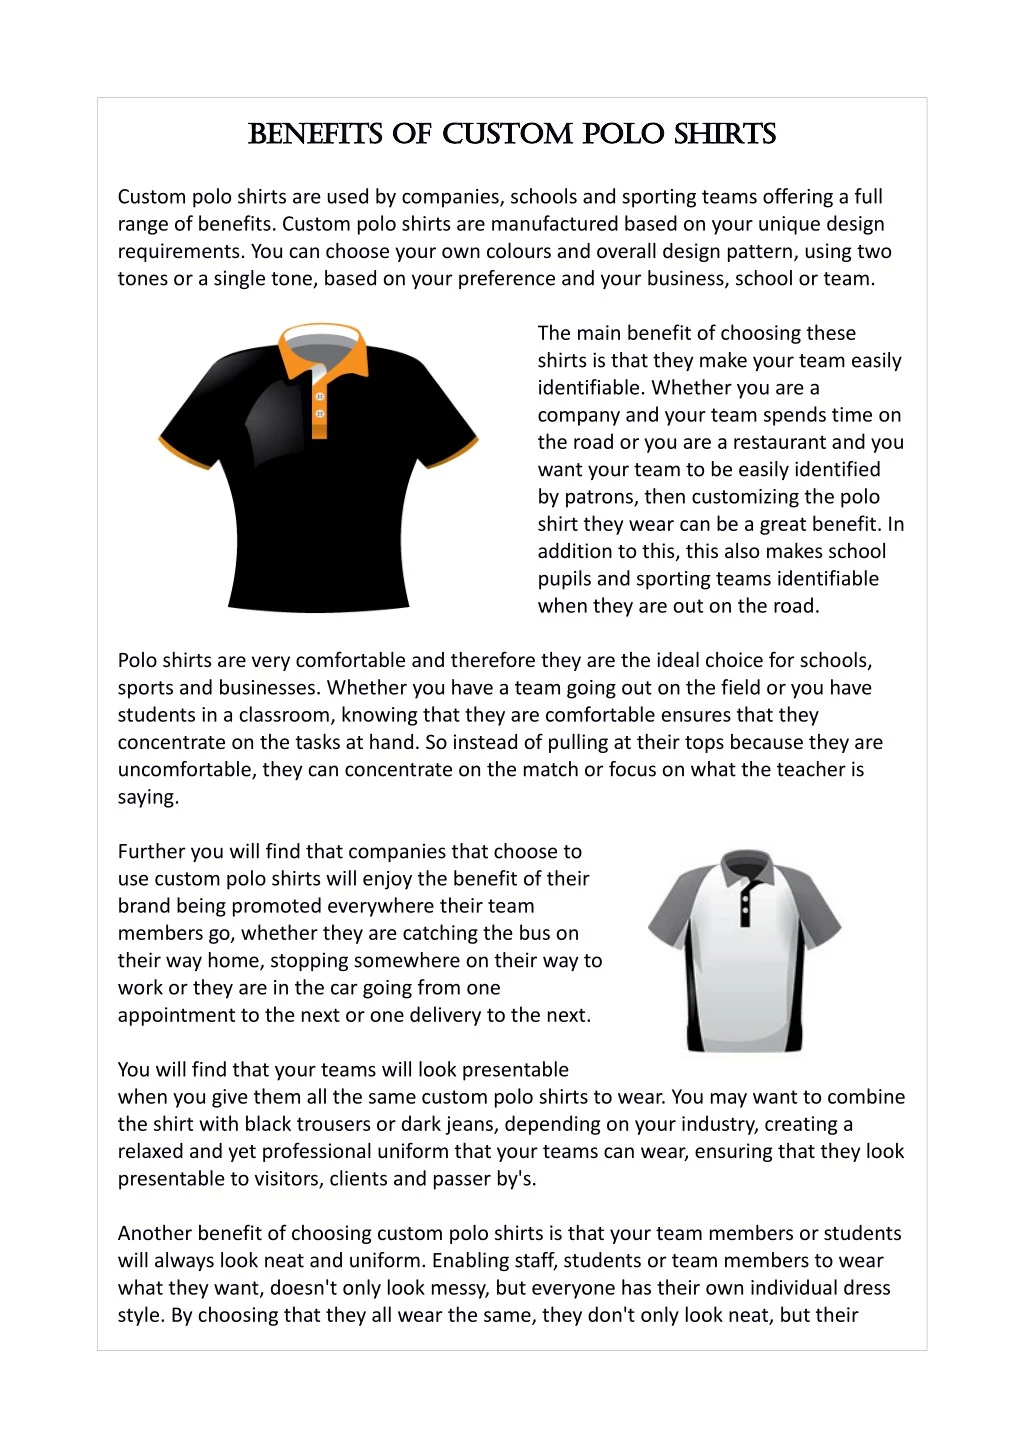 benefits of custom polo shirts benefits of custom